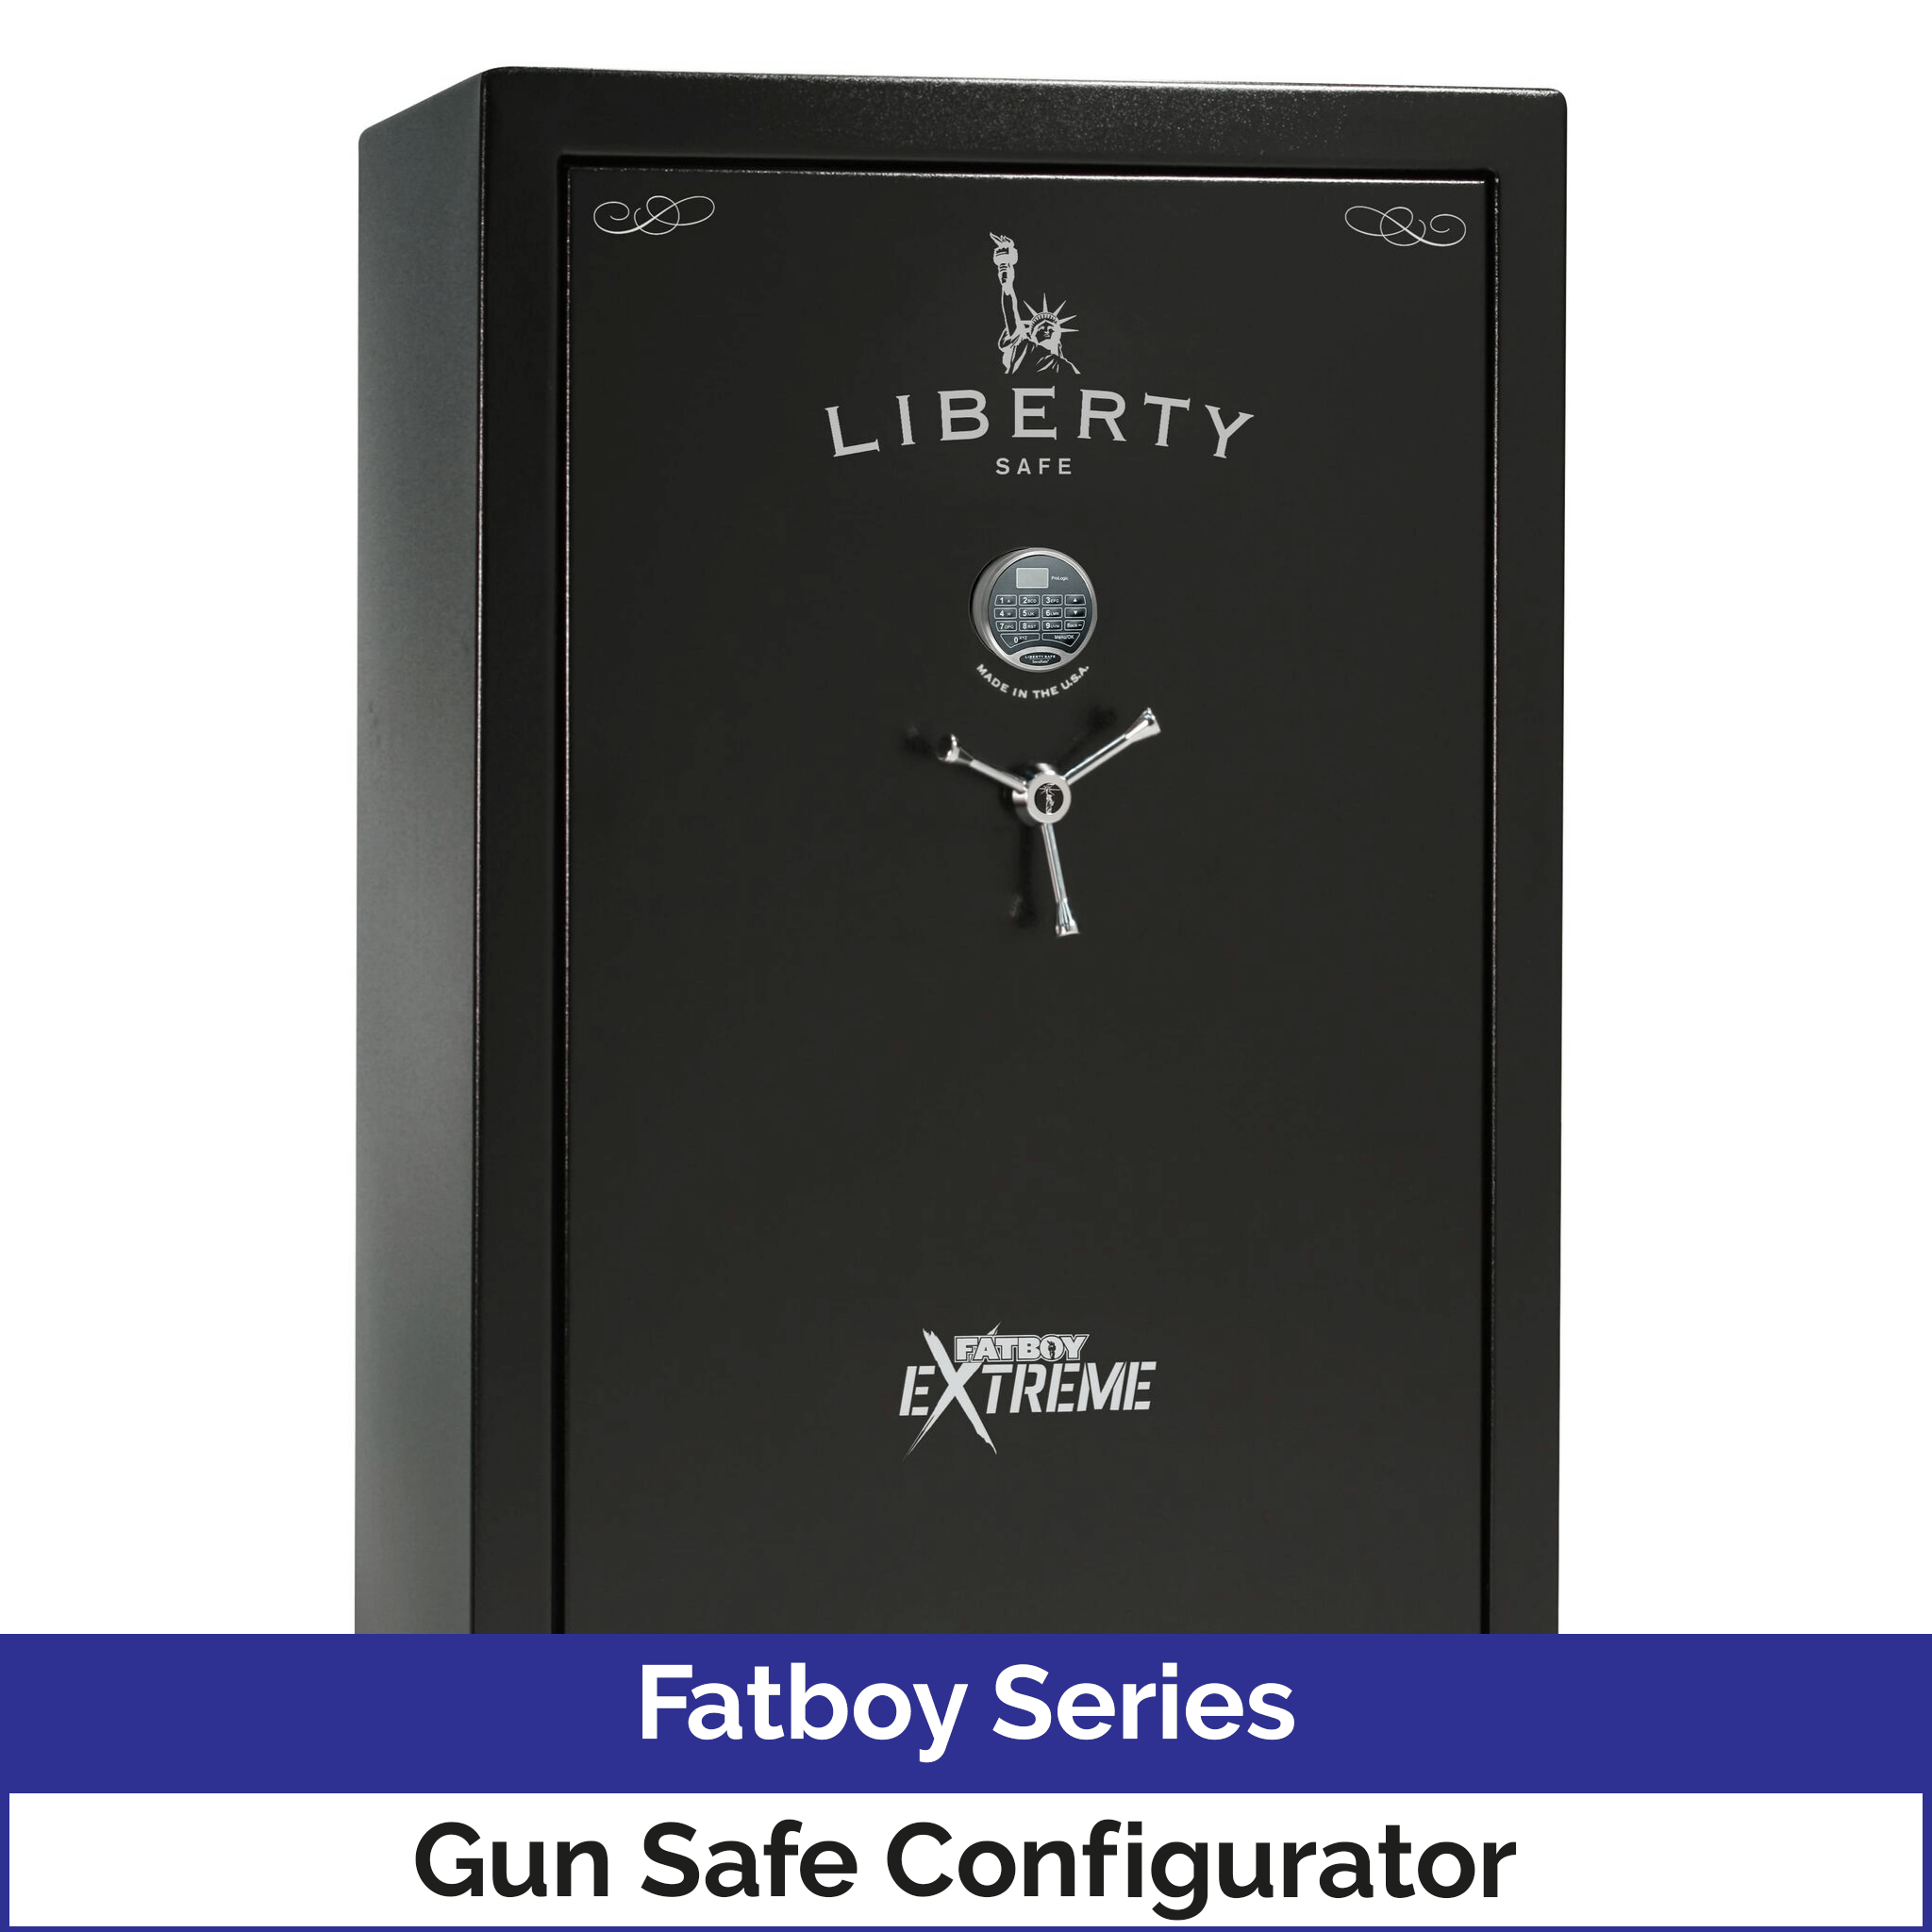 Liberty Fatboy Series Gun Safe Configurator, photo 1